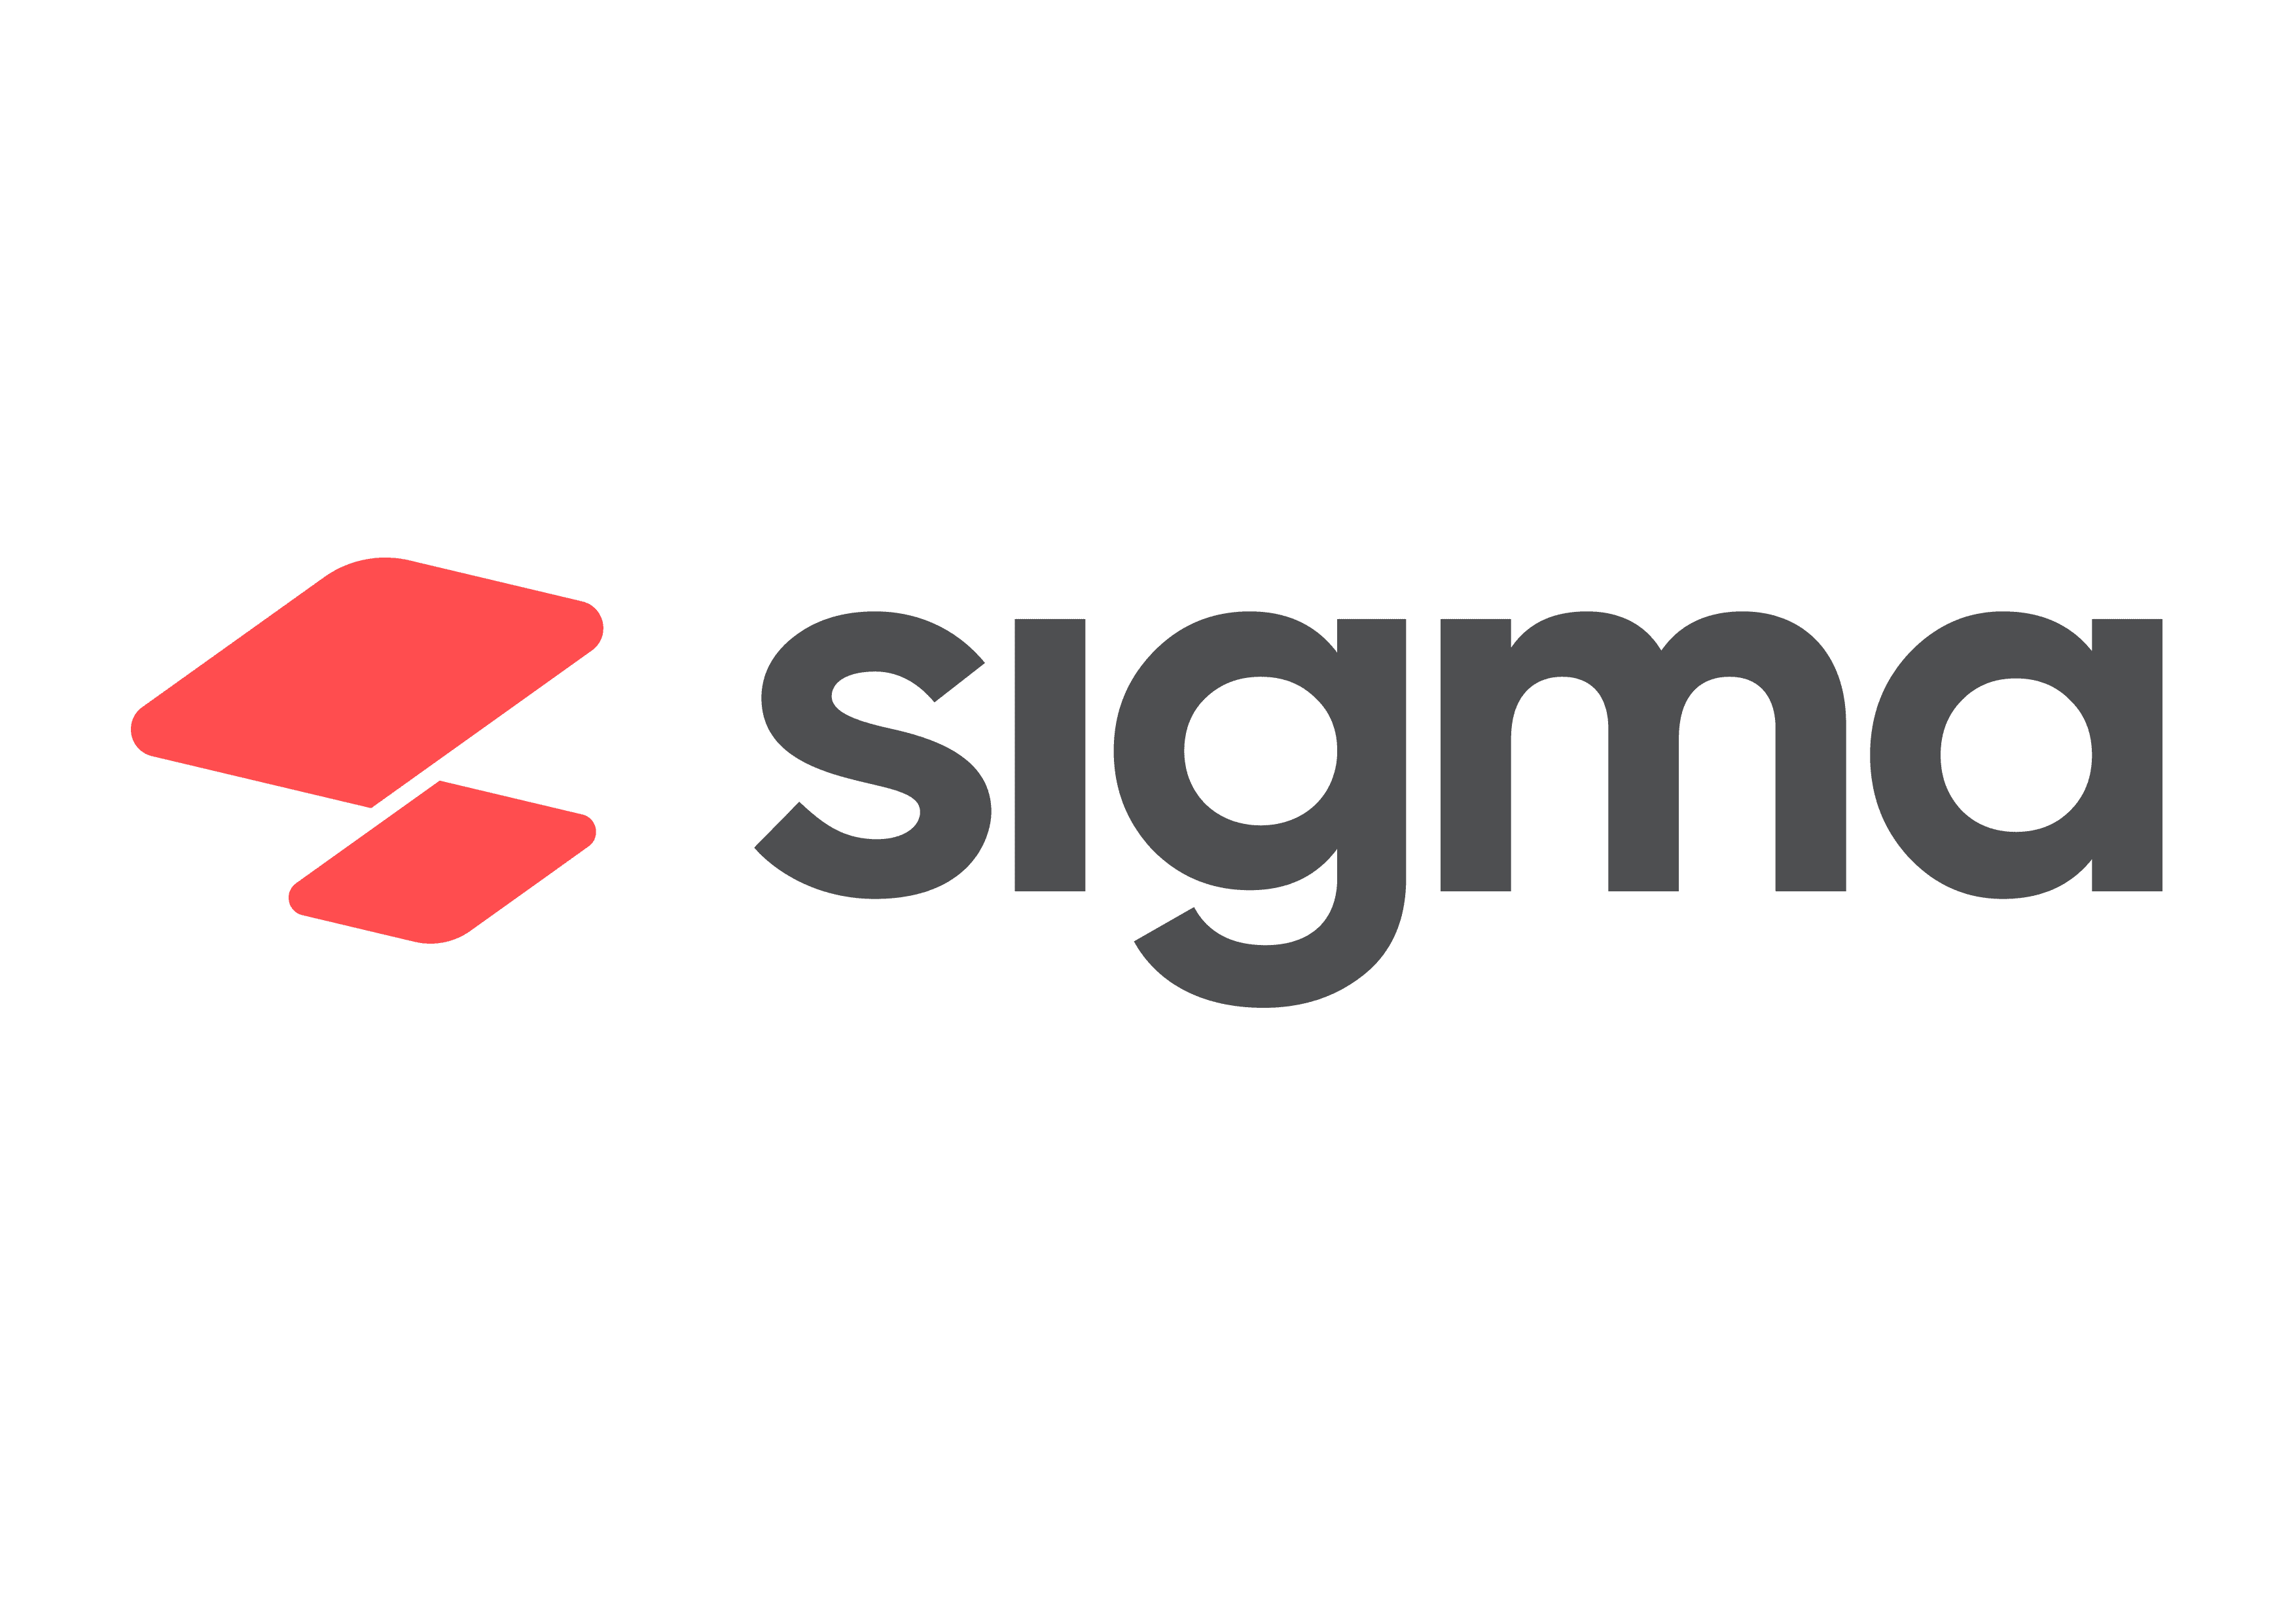 Sigma логотип. Атол Sigma лого. Sigma услуги. Sigma касса логотип. Сигма сборник